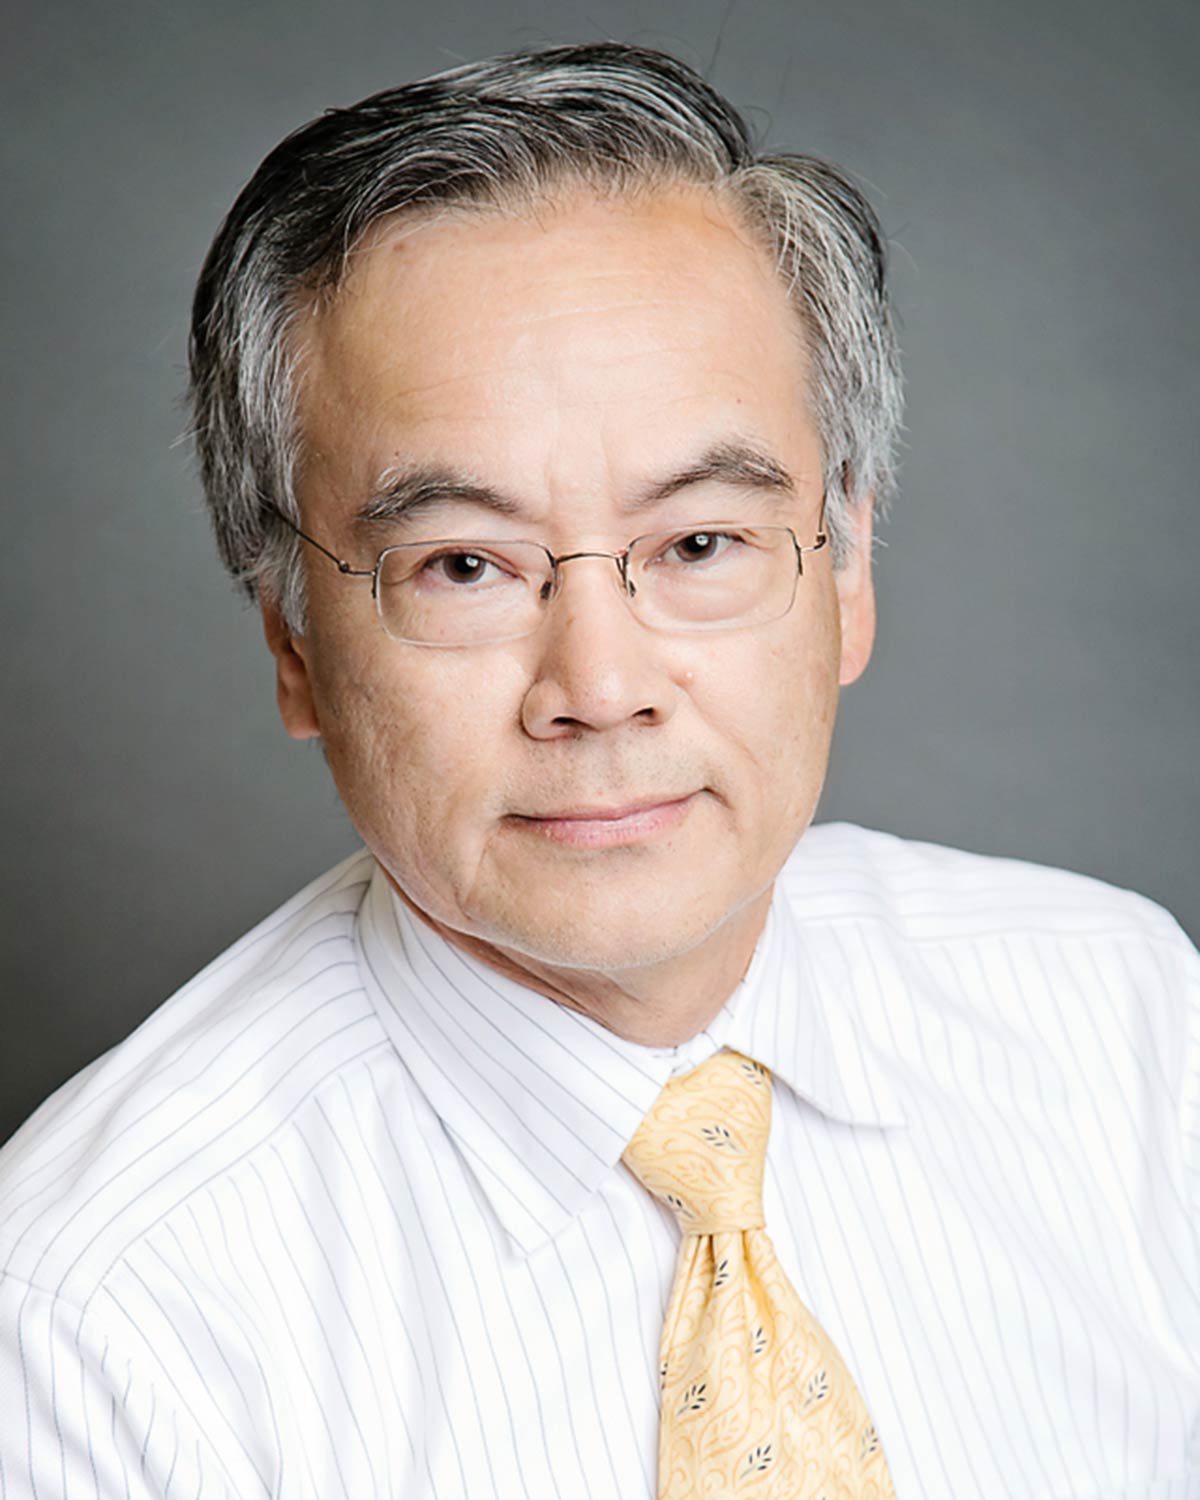 Professional headshot photograph of Dr. Ben Abraham